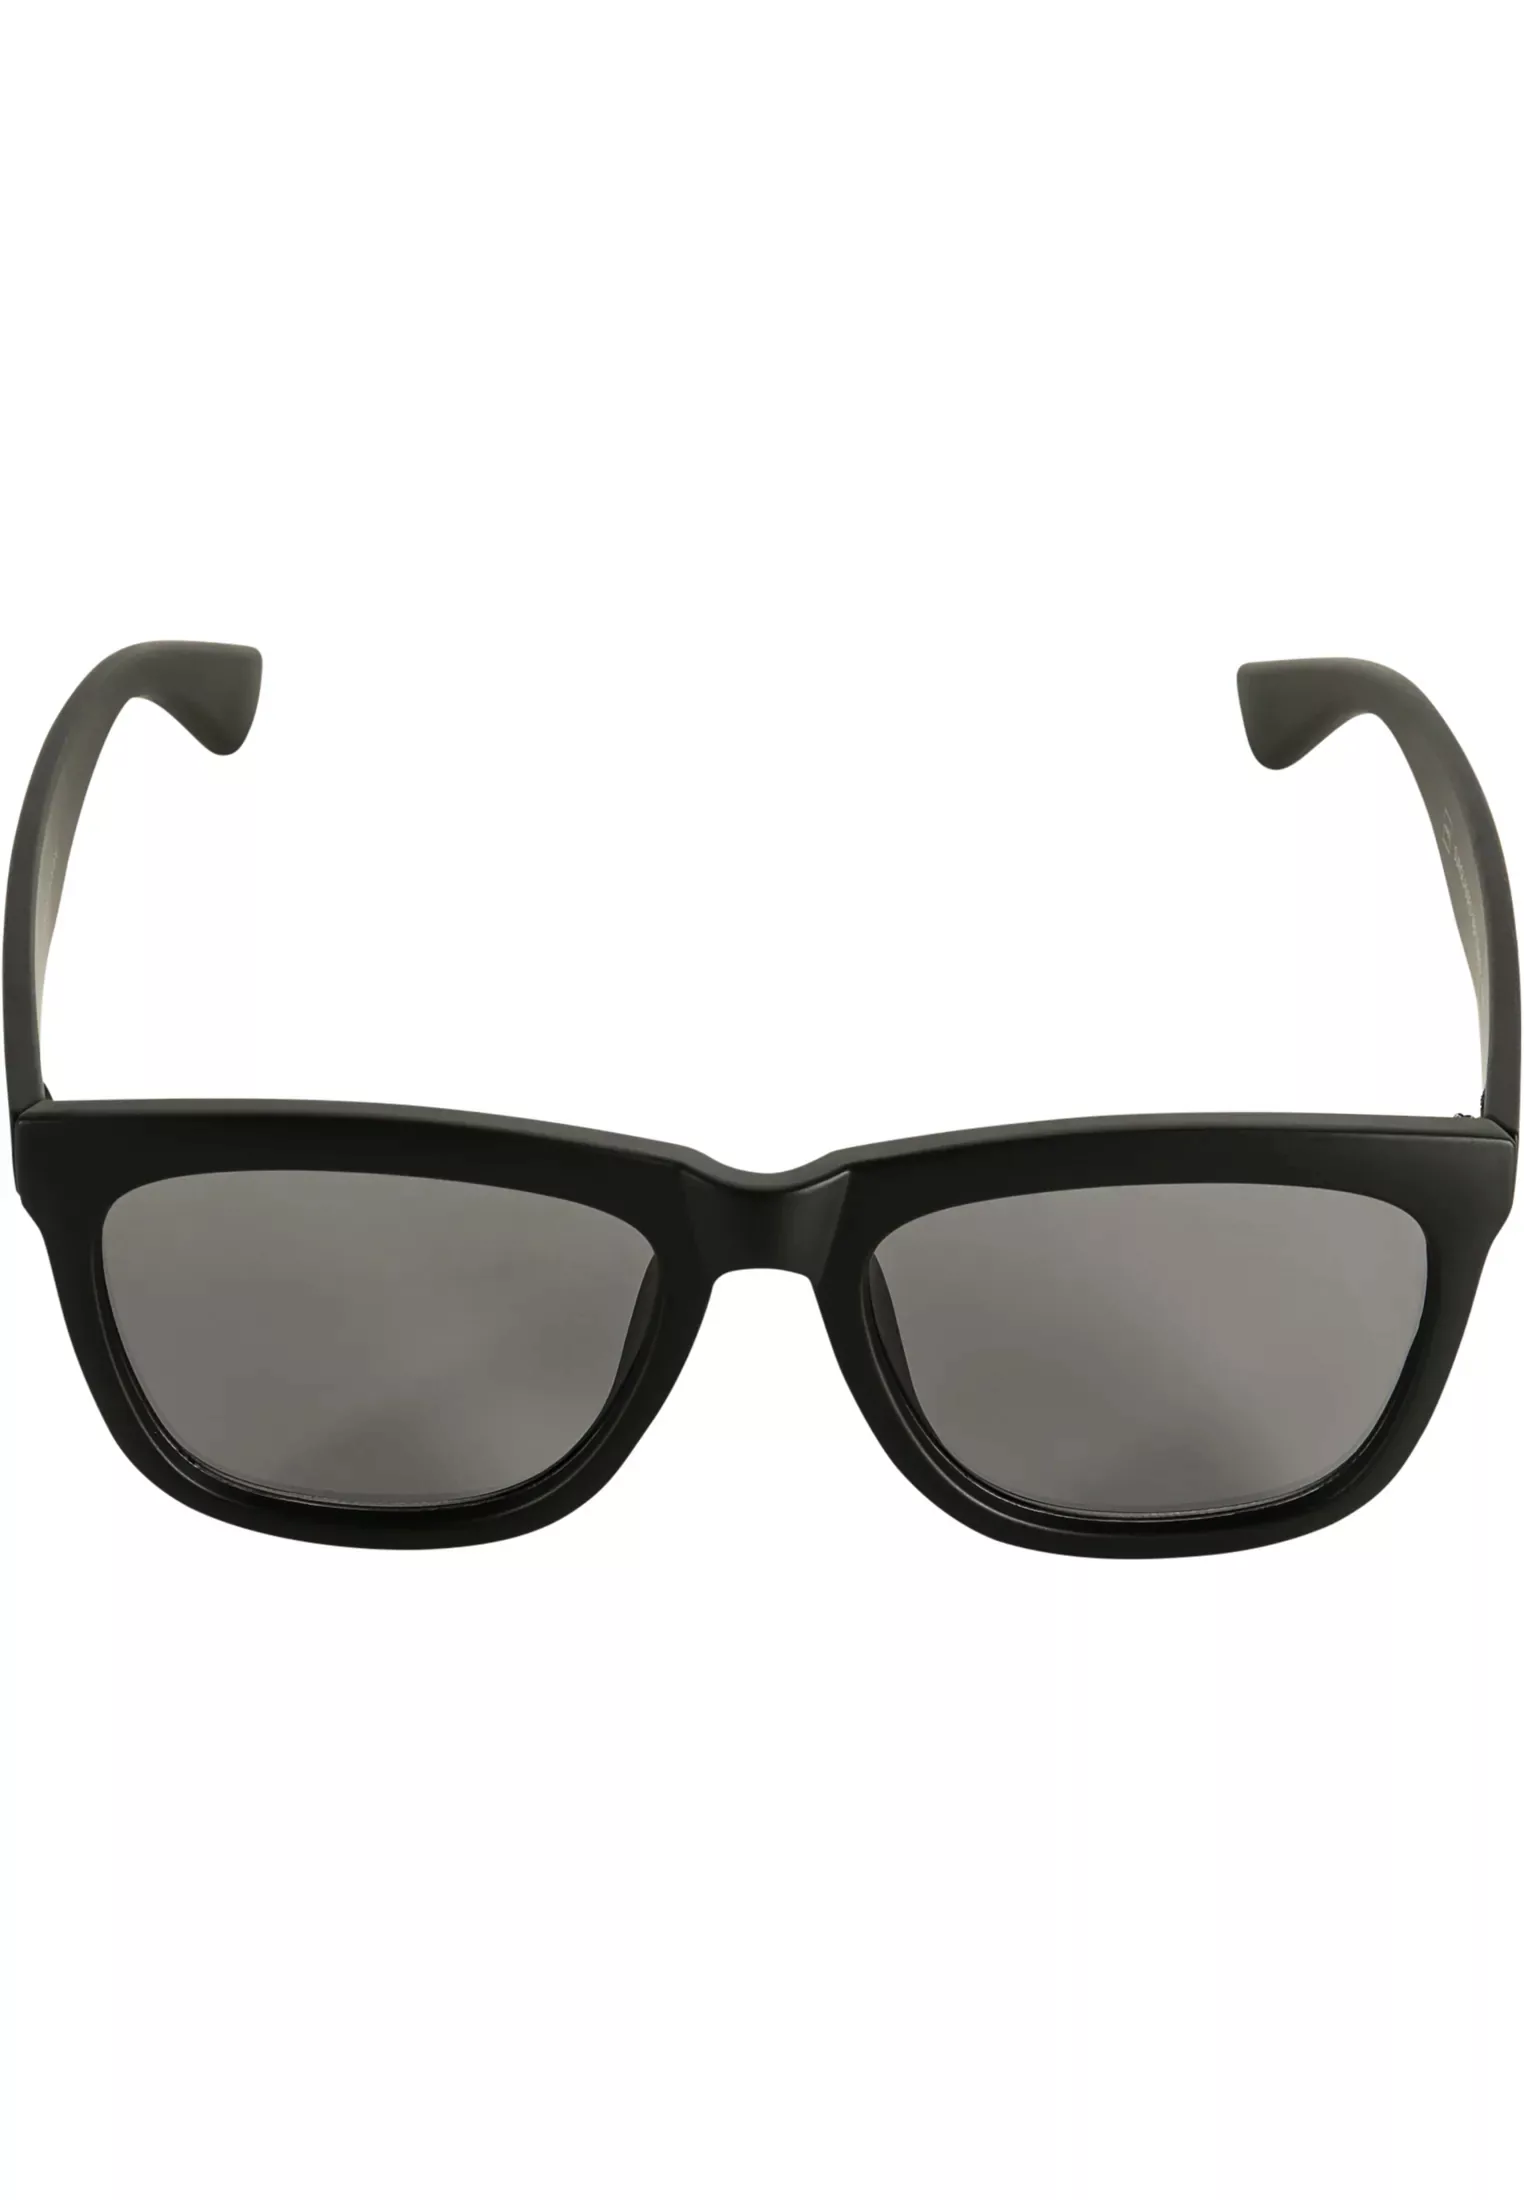 MSTRDS Sonnenbrille "Accessoires Sunglasses September" günstig online kaufen